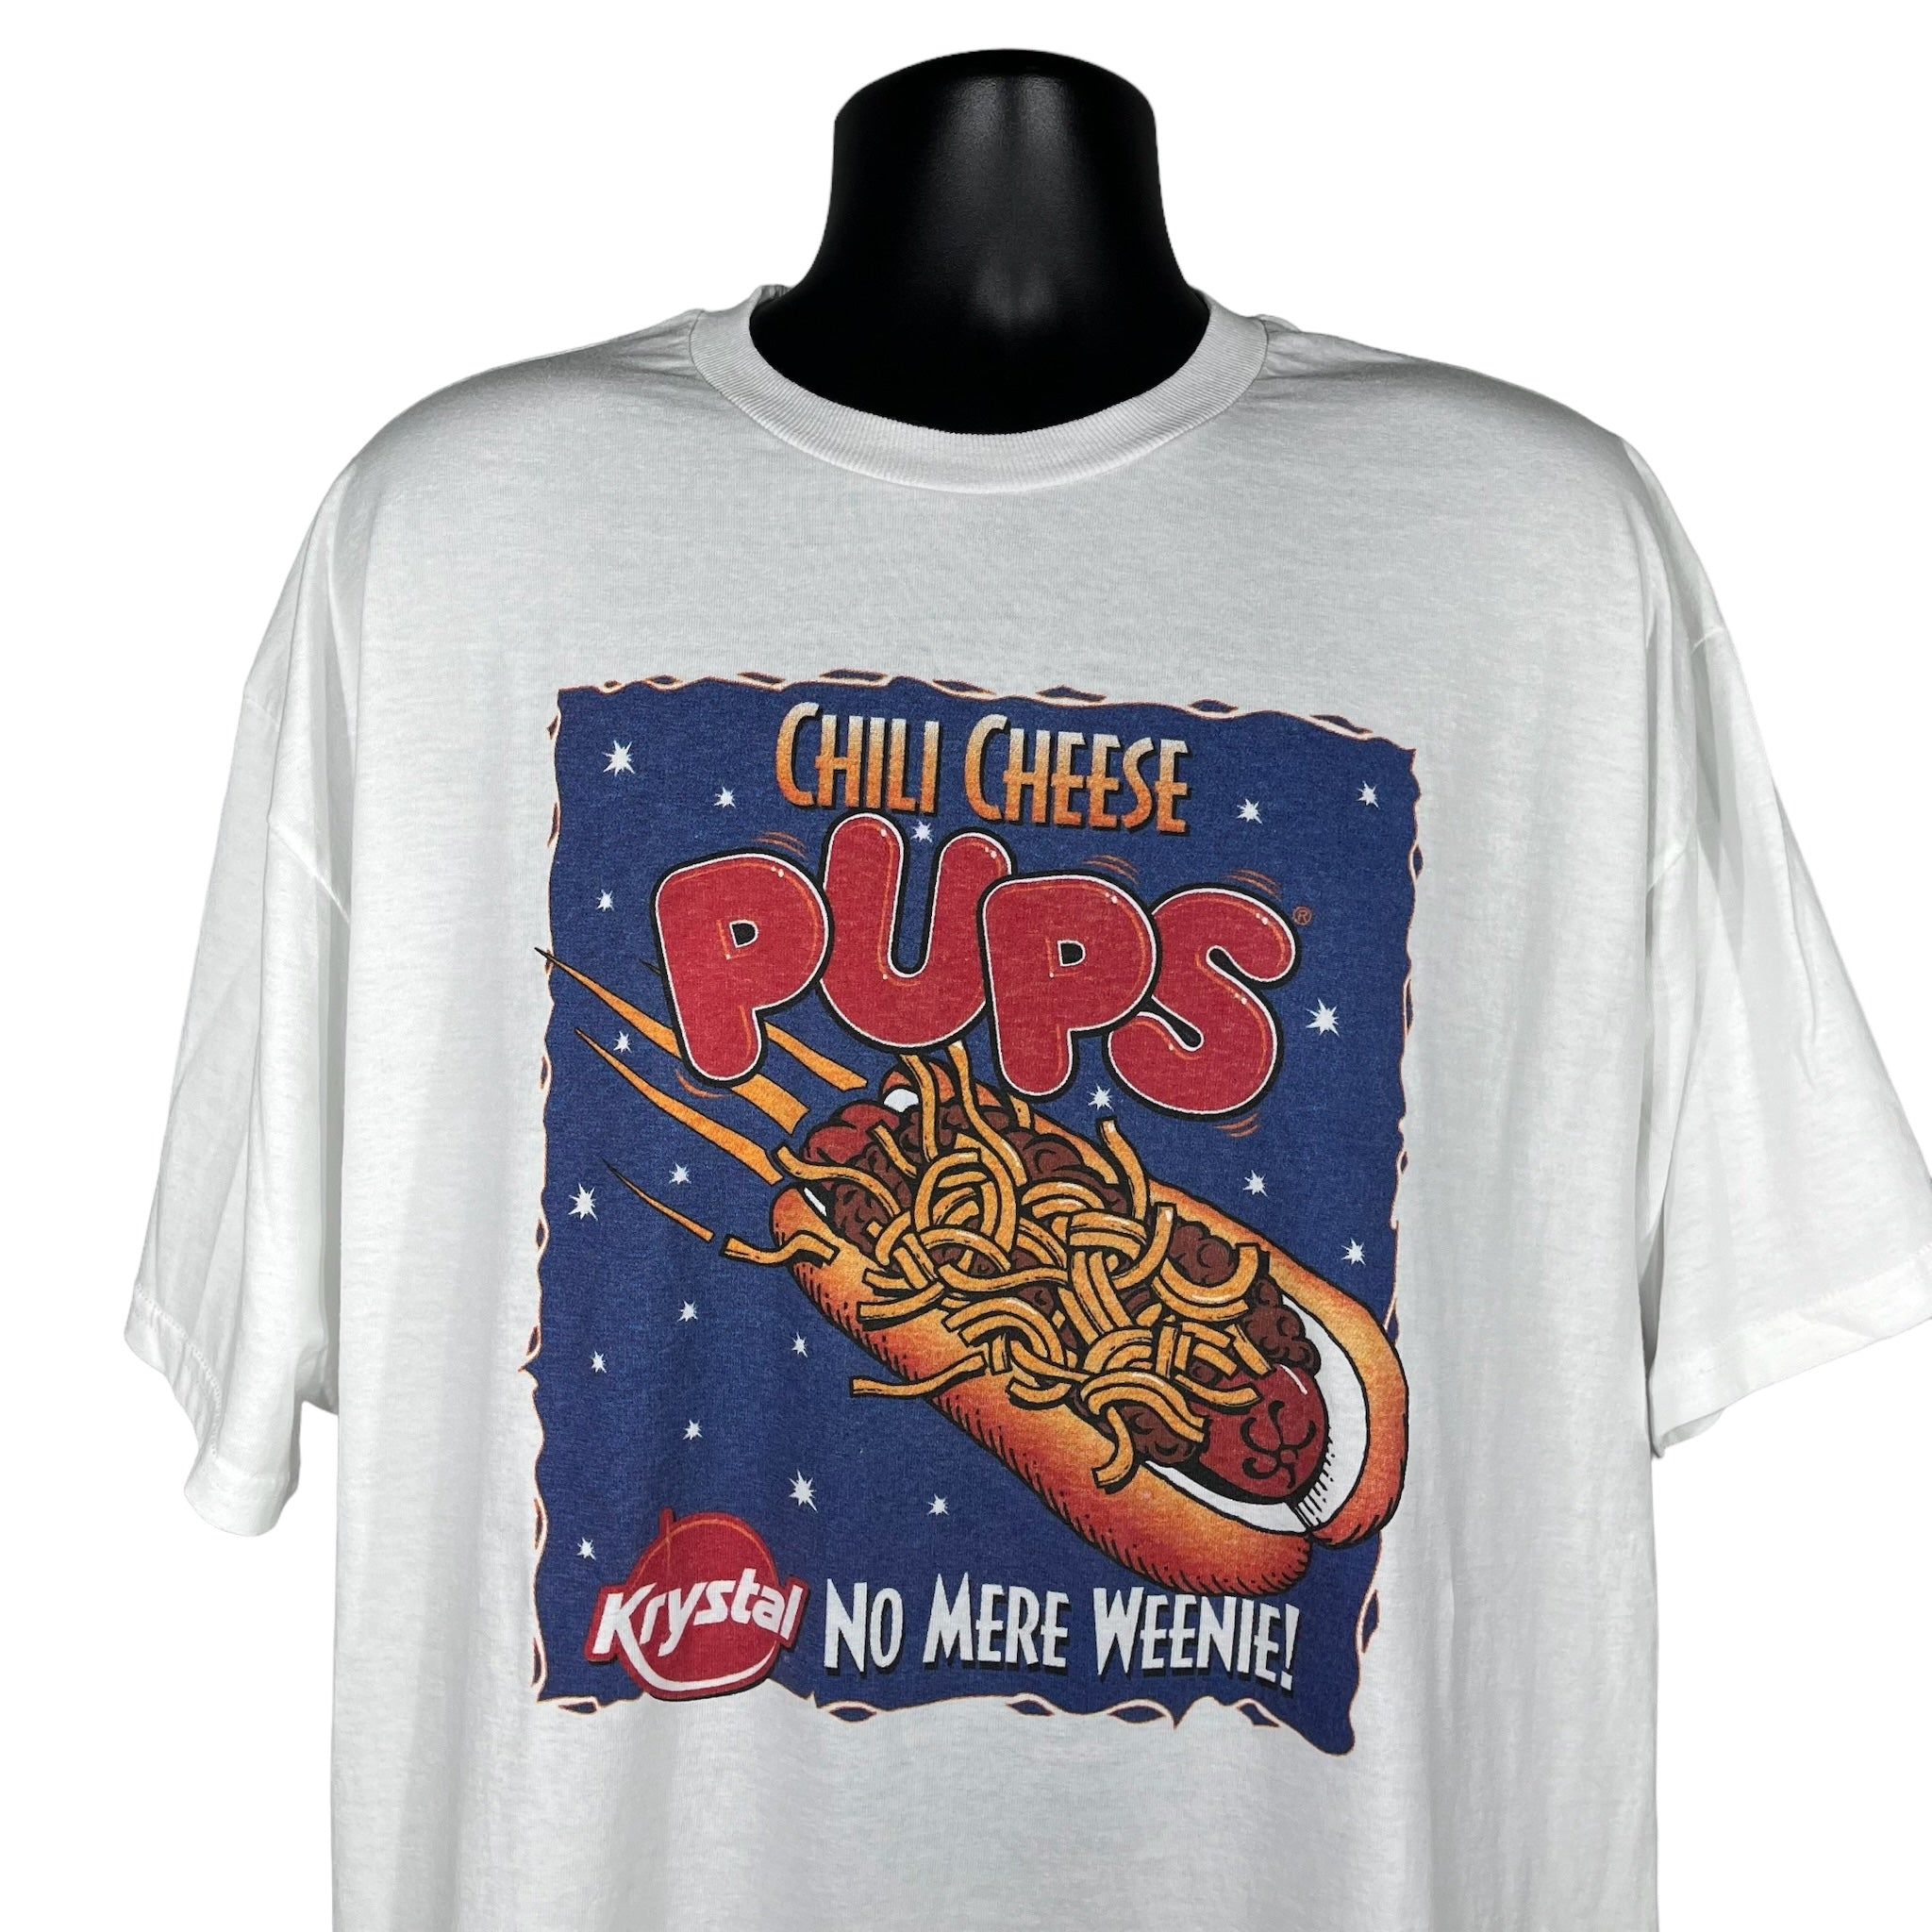 Vintage Krystal "Chili Cheese Pups" Snack Promo Tee 2000s